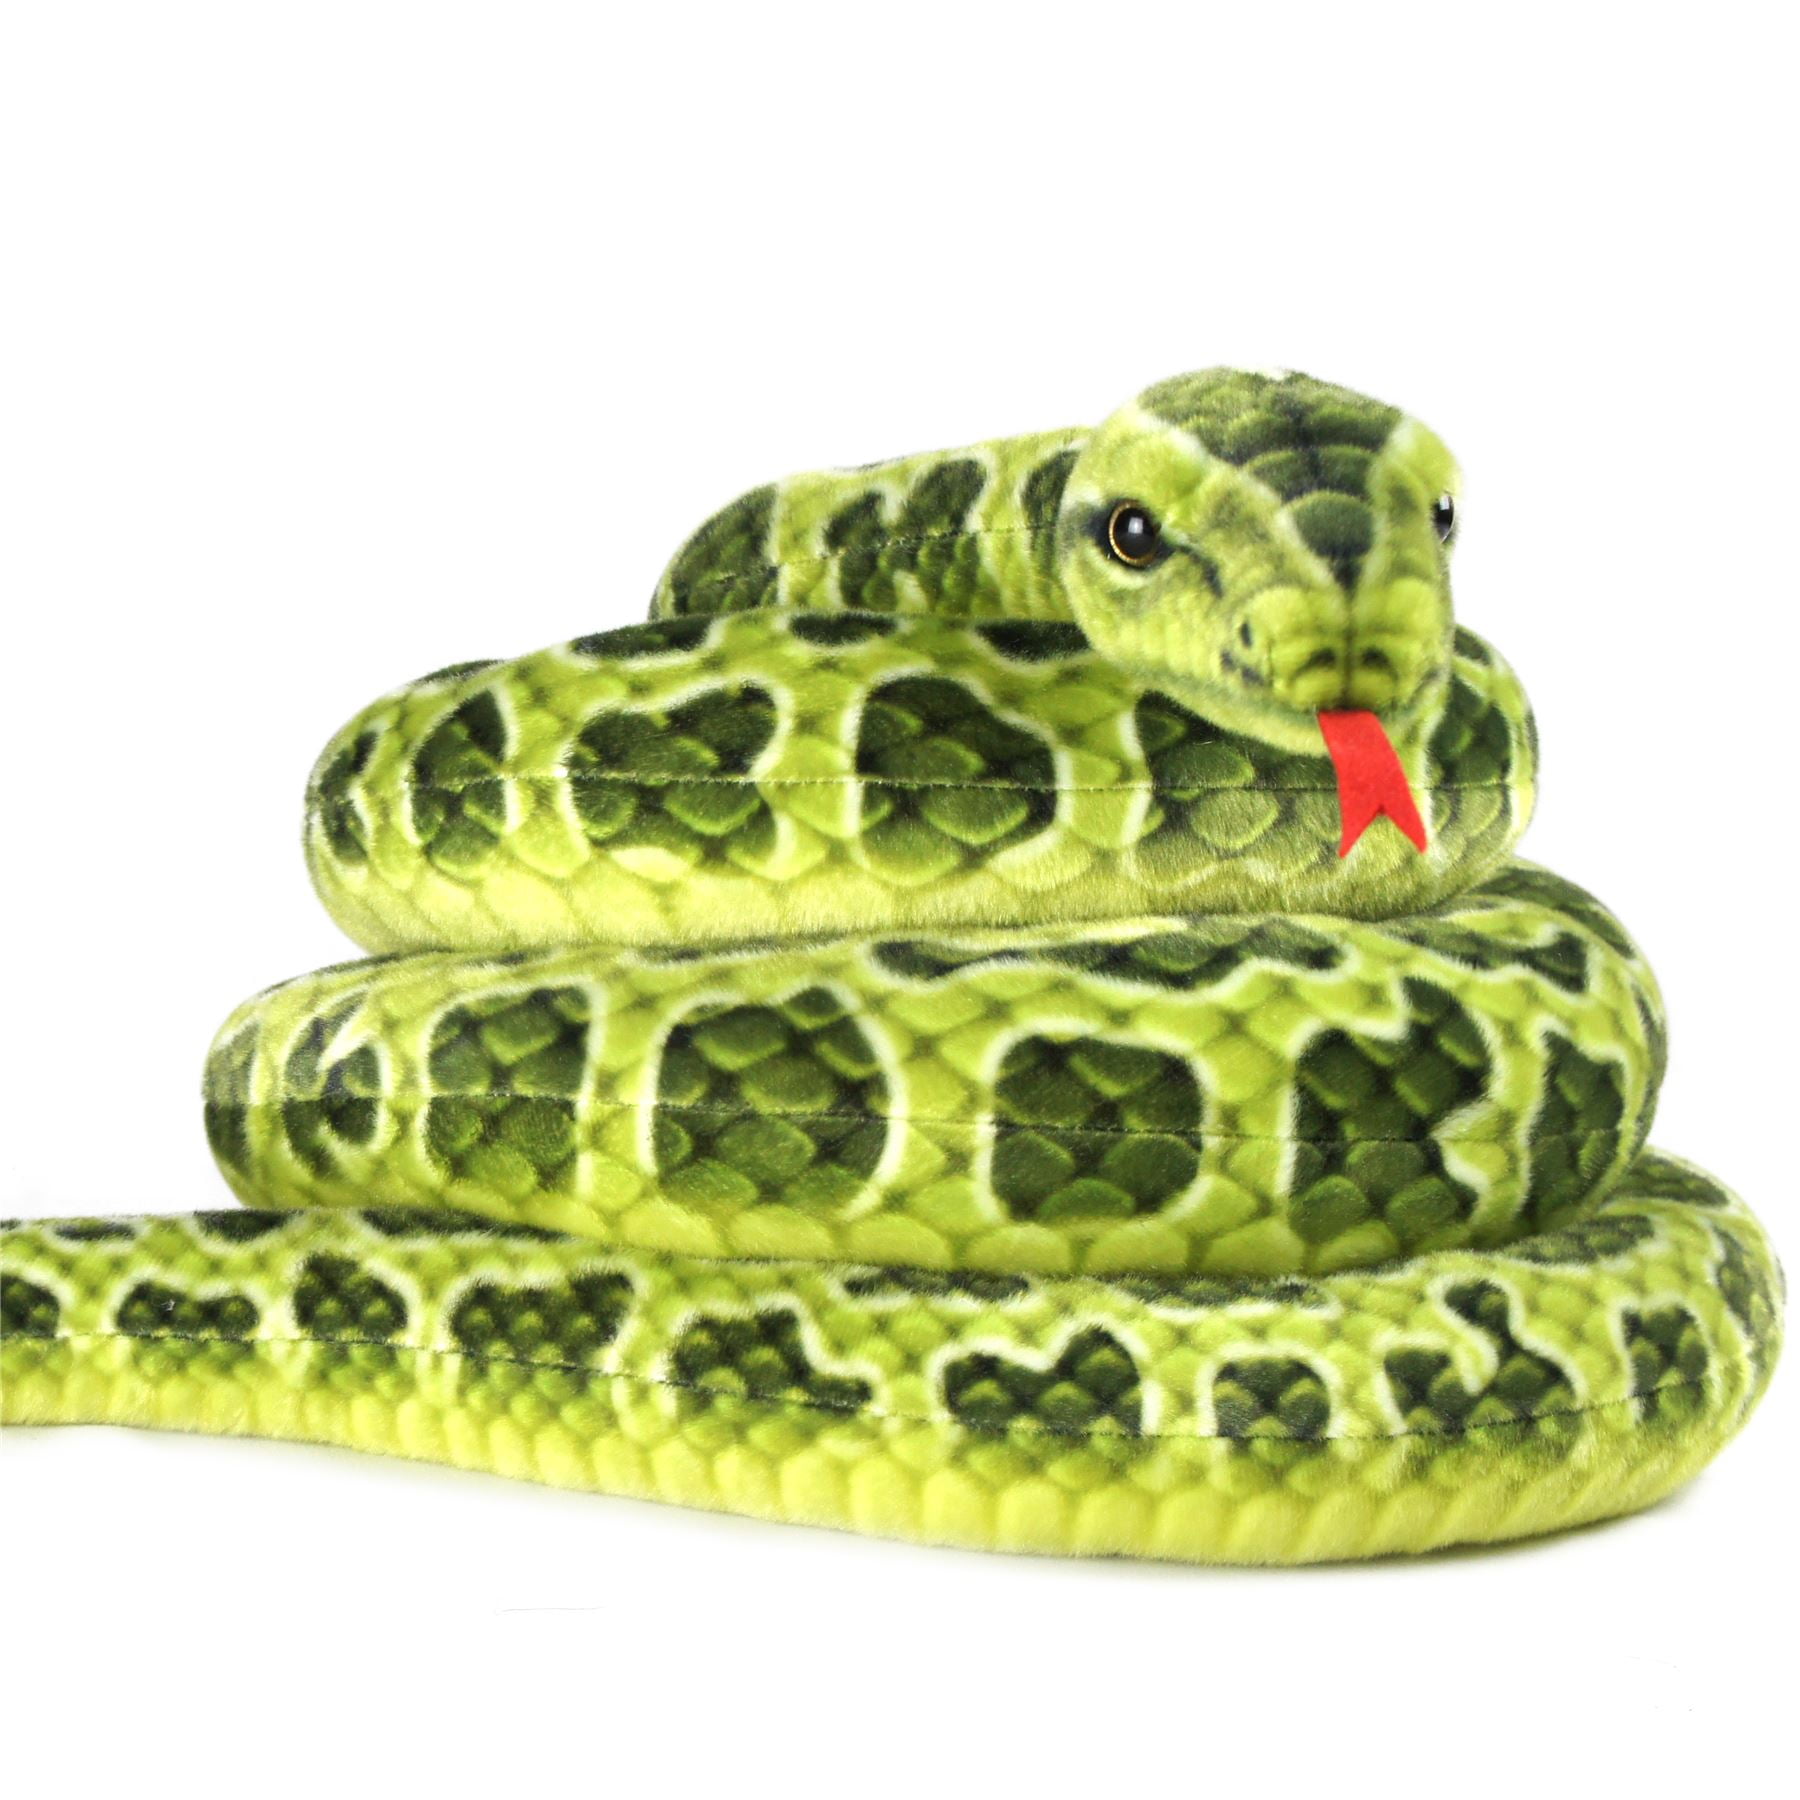 Rhode Island Novelty Giant Anaconda Snake Plush Toy 100 Inch Long for sale online 